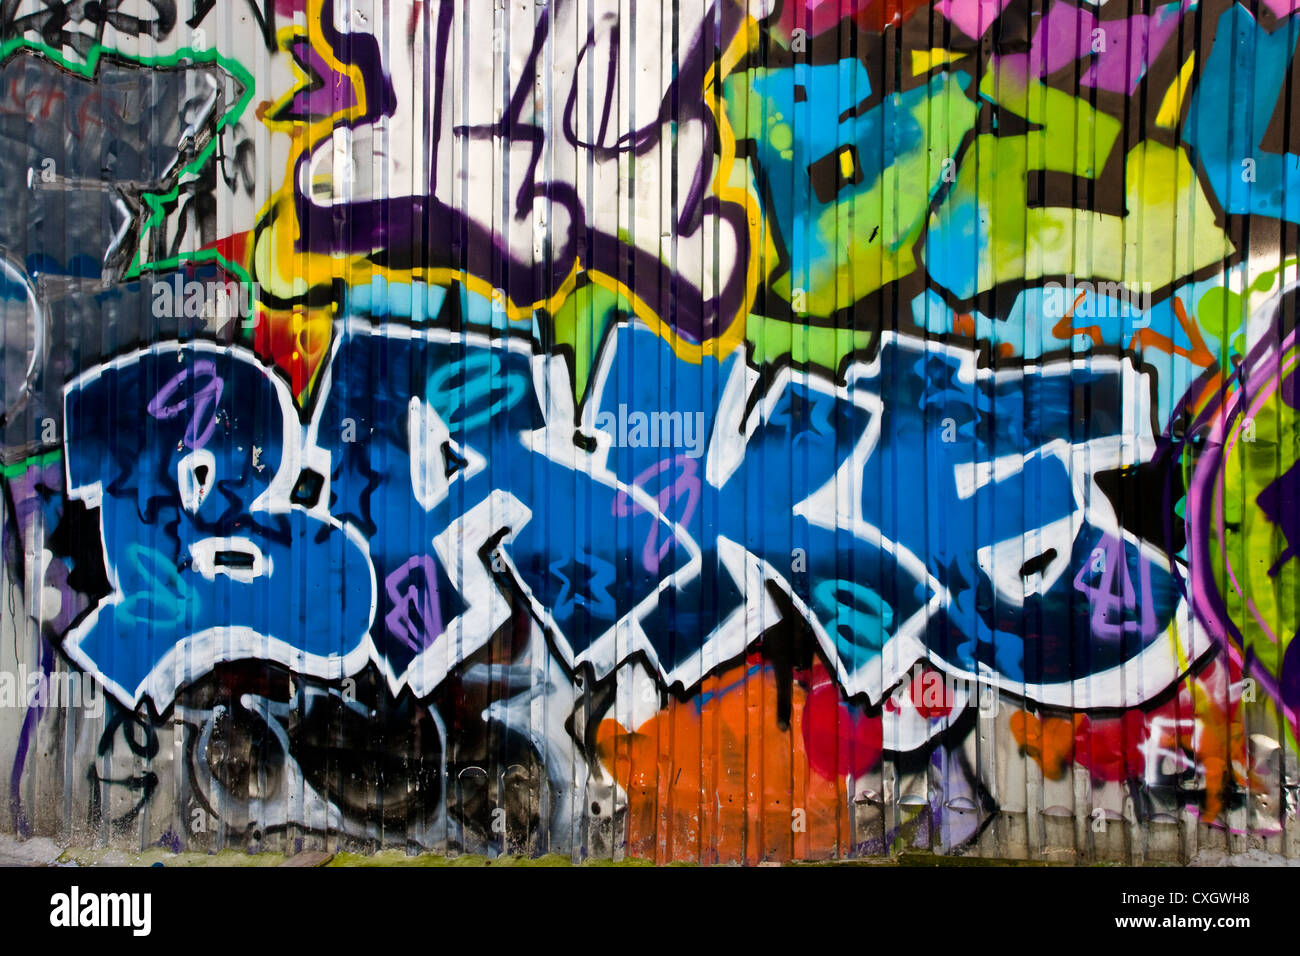 Vibrant urban graffiti street art with word bake on metal wall London England Europe Stock Photo